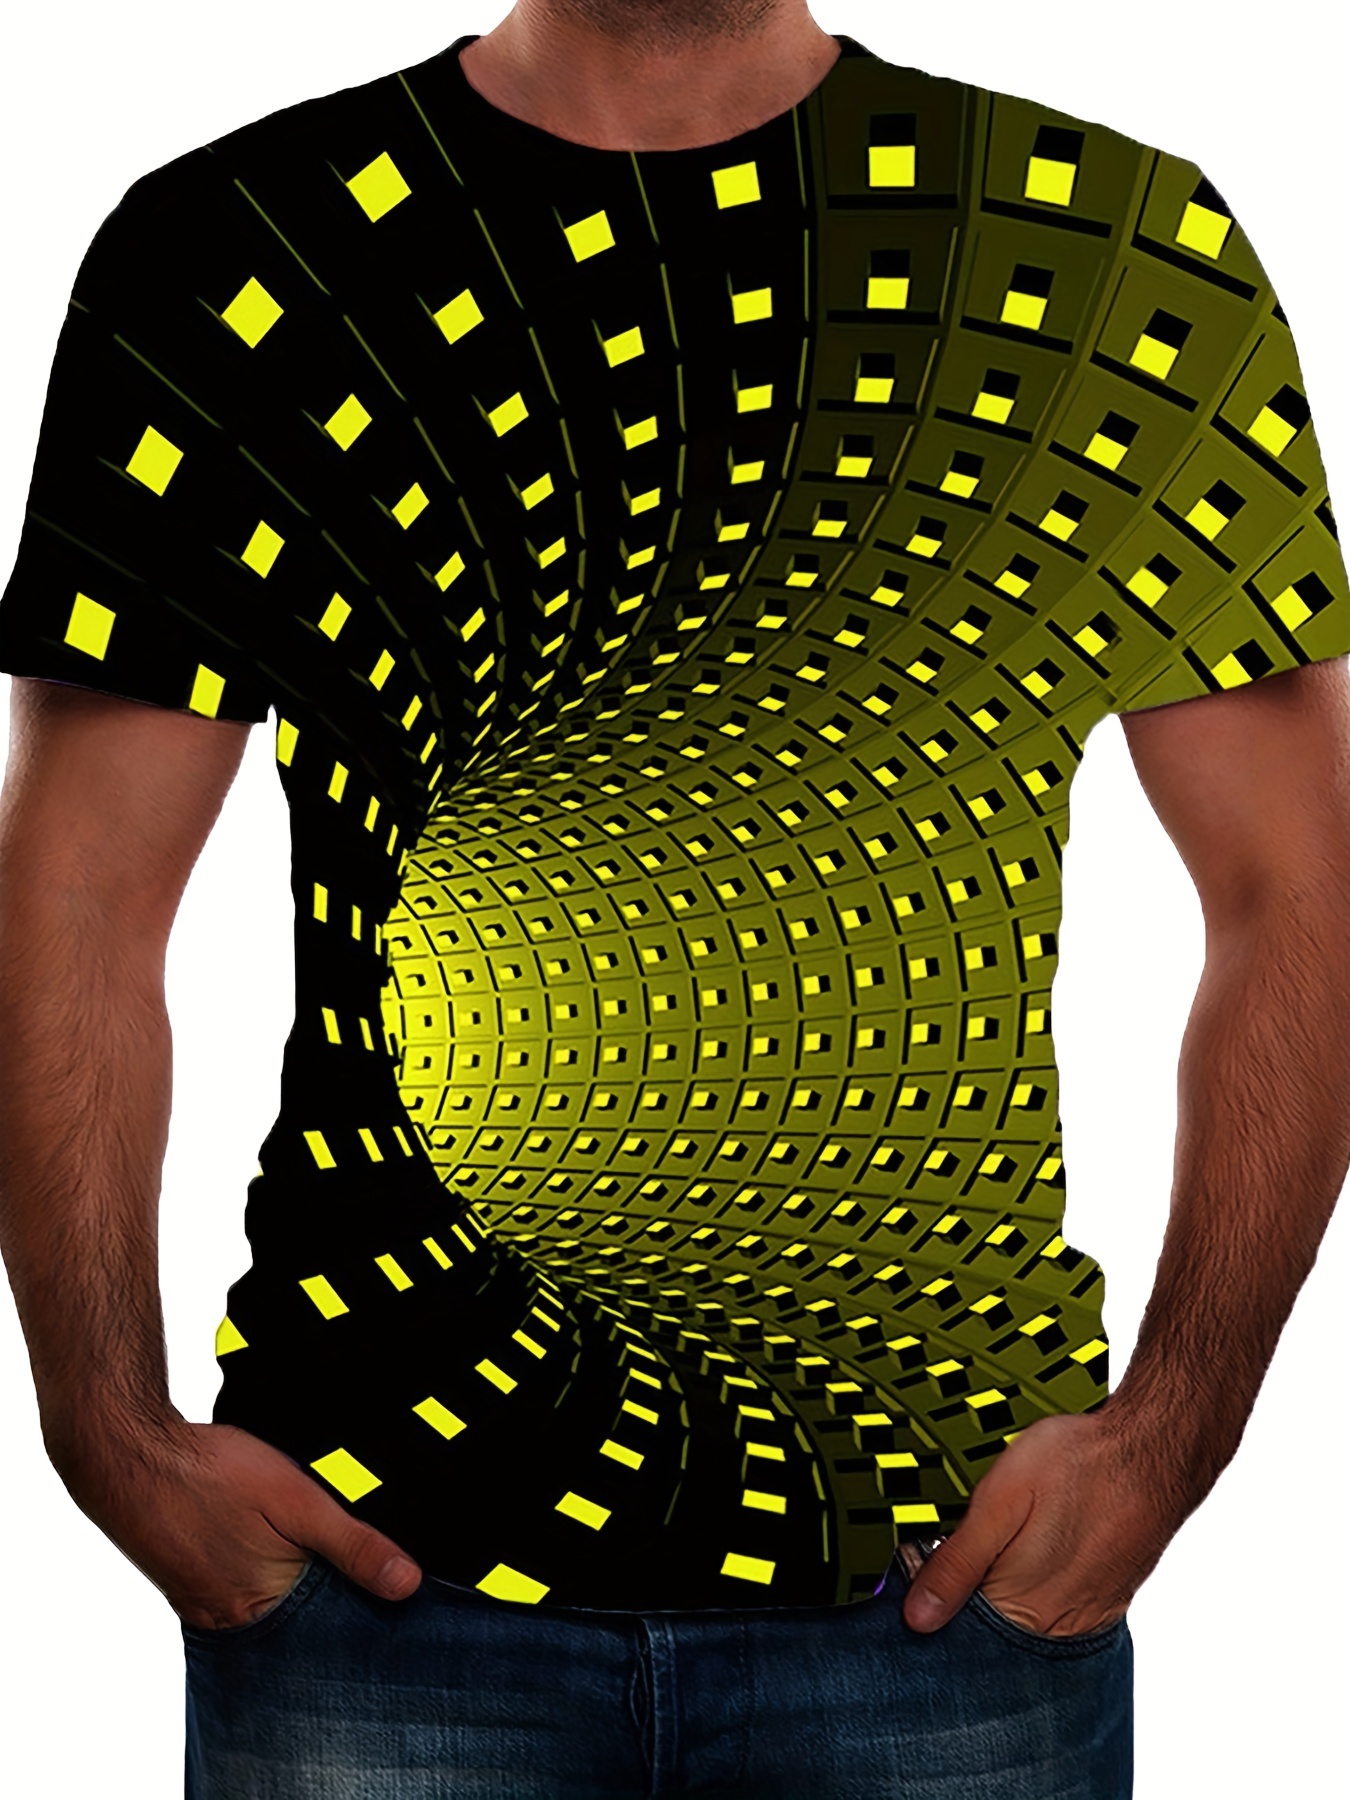 Swirl T-shirt Men Graphic Tshirts Cool Casual Tshirts Novelty